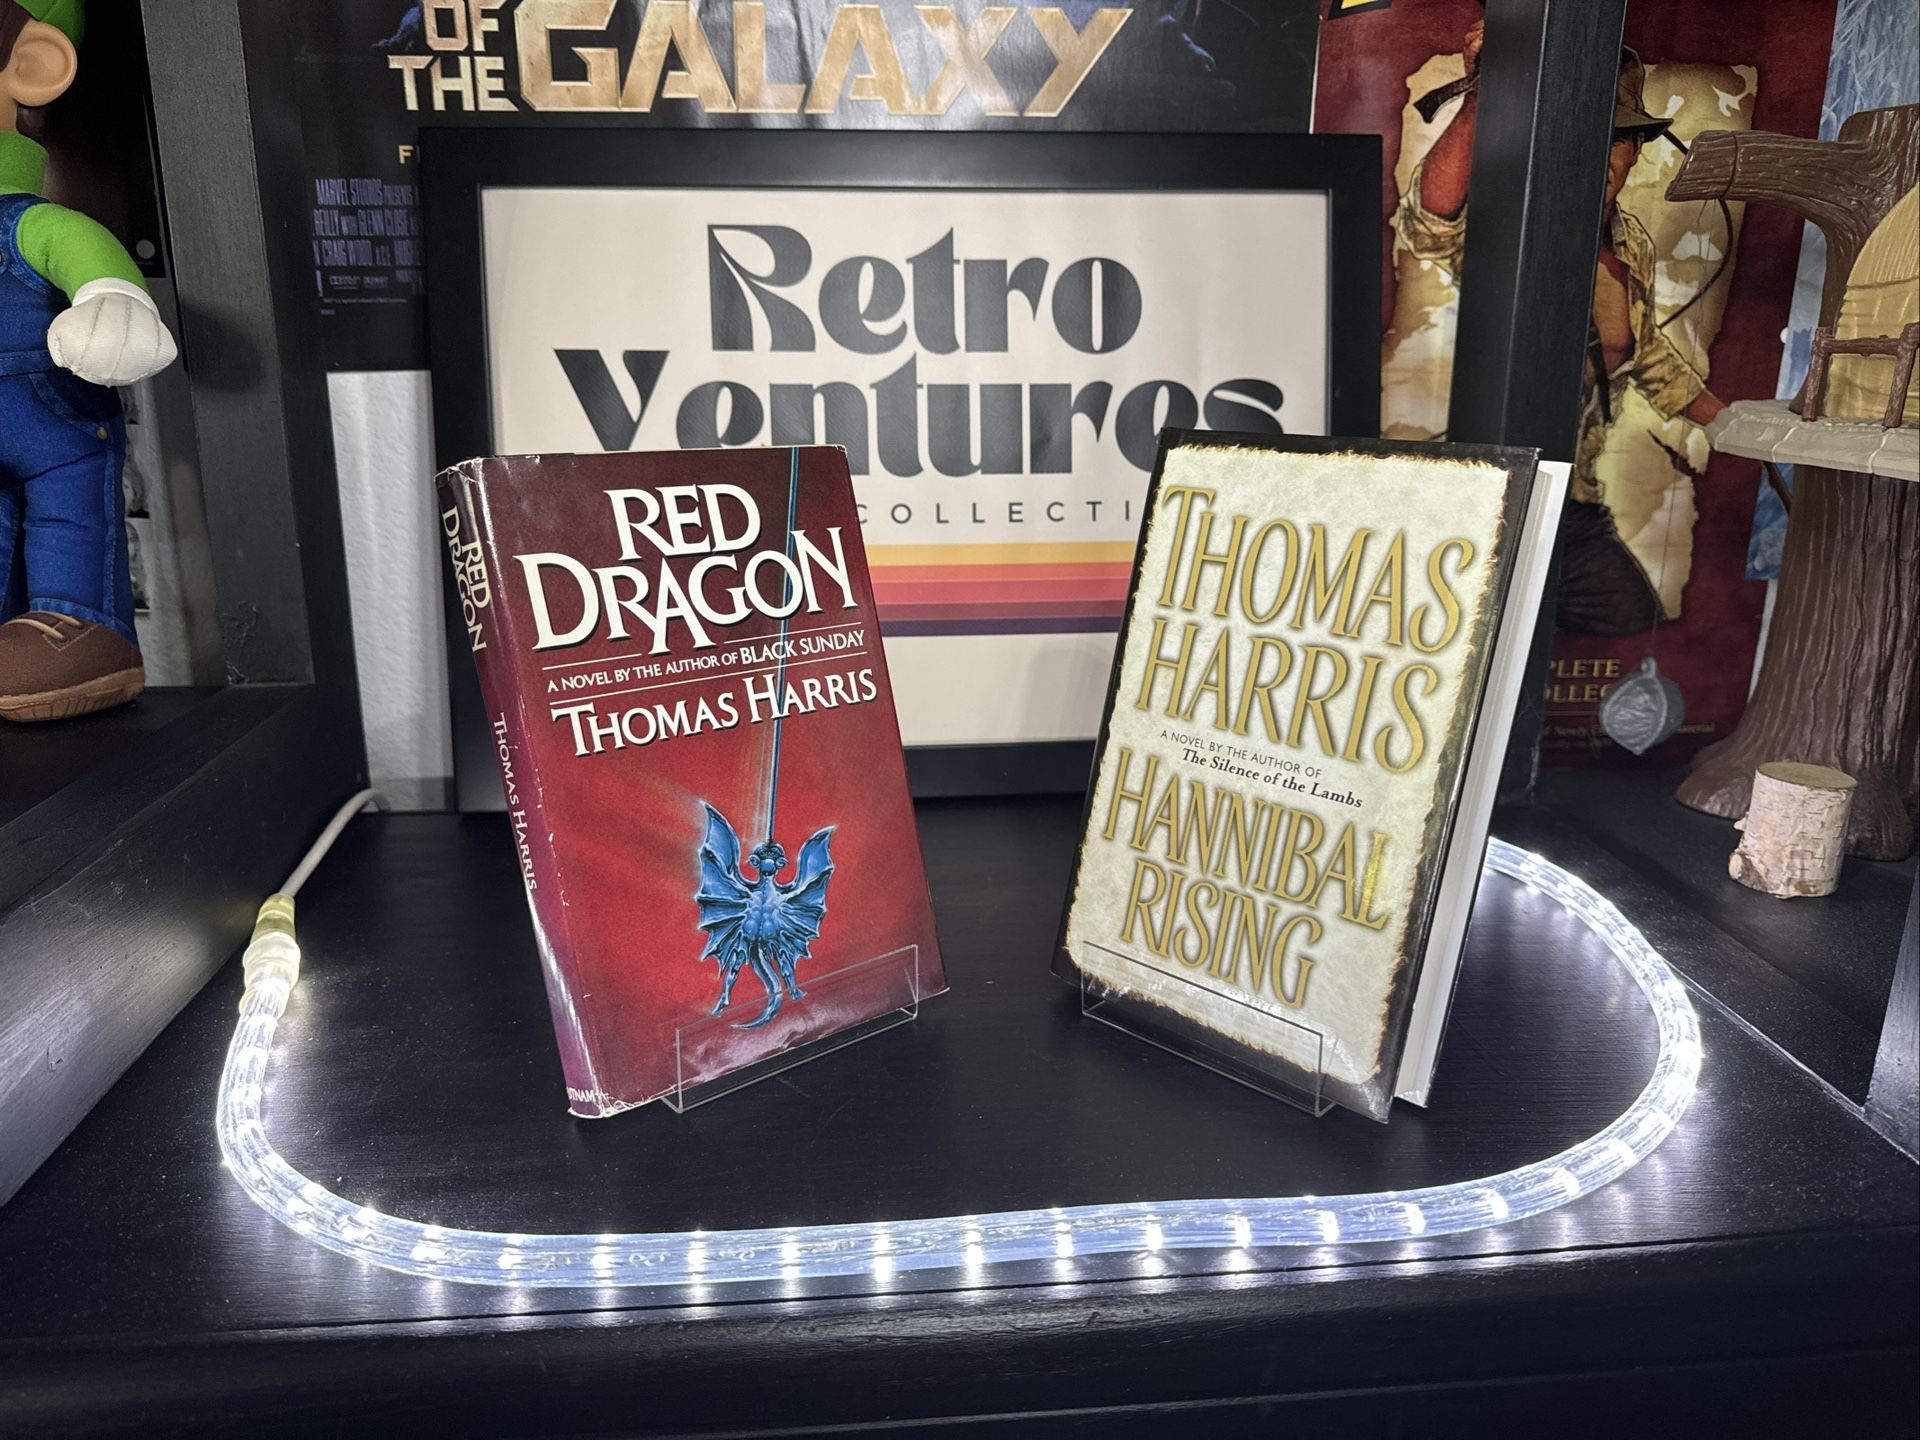 Red Dragon Thomas Harris 1981 Hardcover Dust Jacket w 2006 Hannibal Rising VG